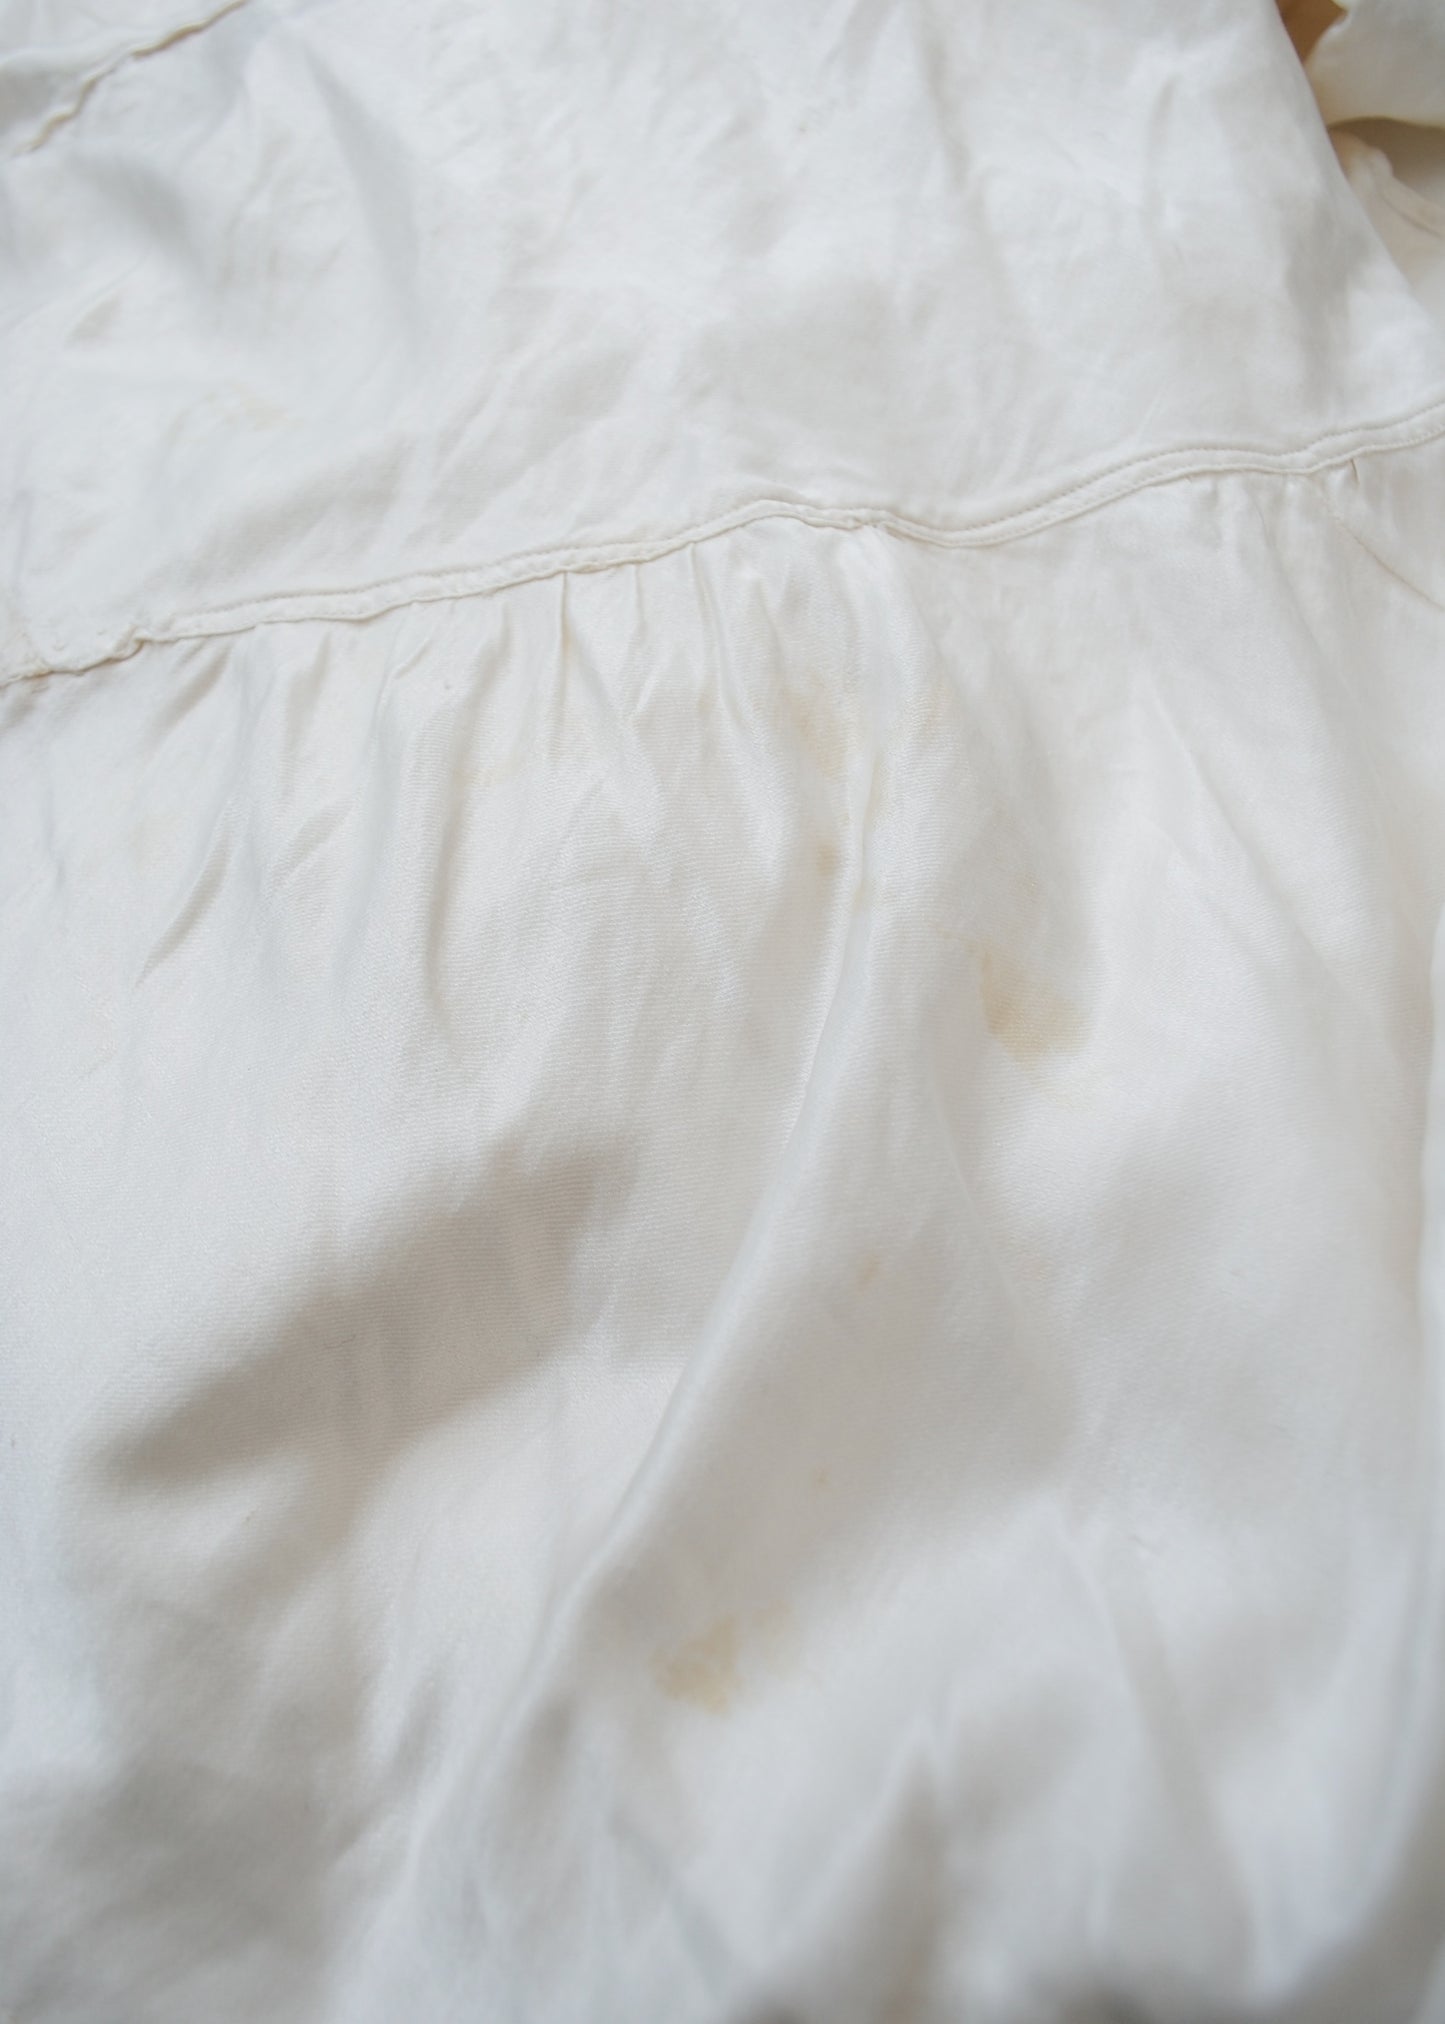 Stunning Vintage Pure White Feather-Weight Silk Peignoir Robe • Bridal Trousseau